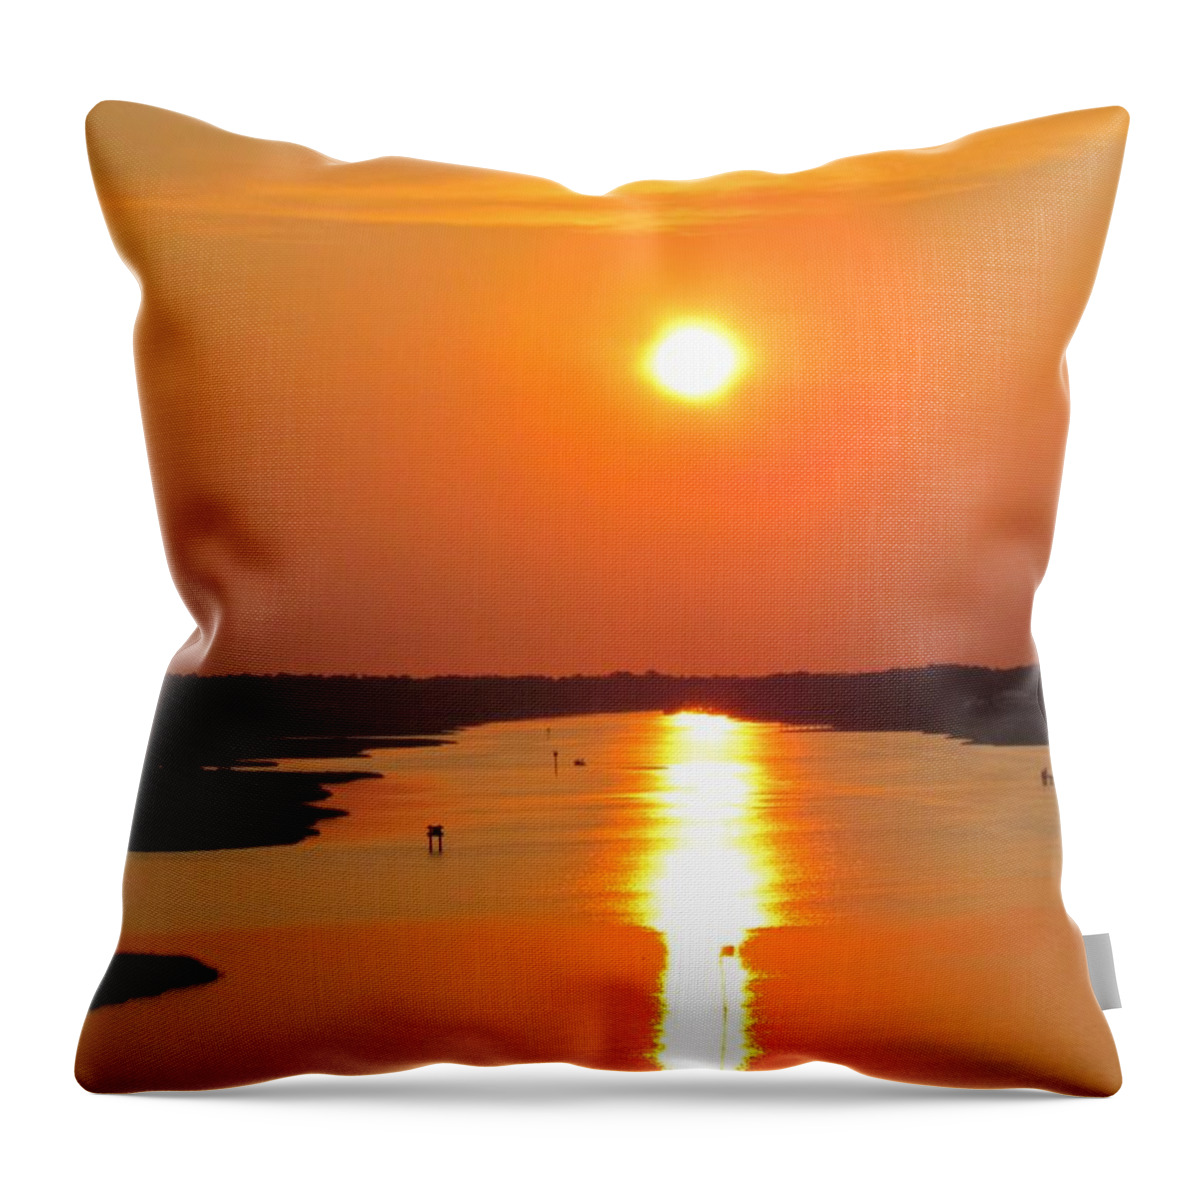 Orange Throw Pillow featuring the photograph Orange Sunset by Cynthia Guinn